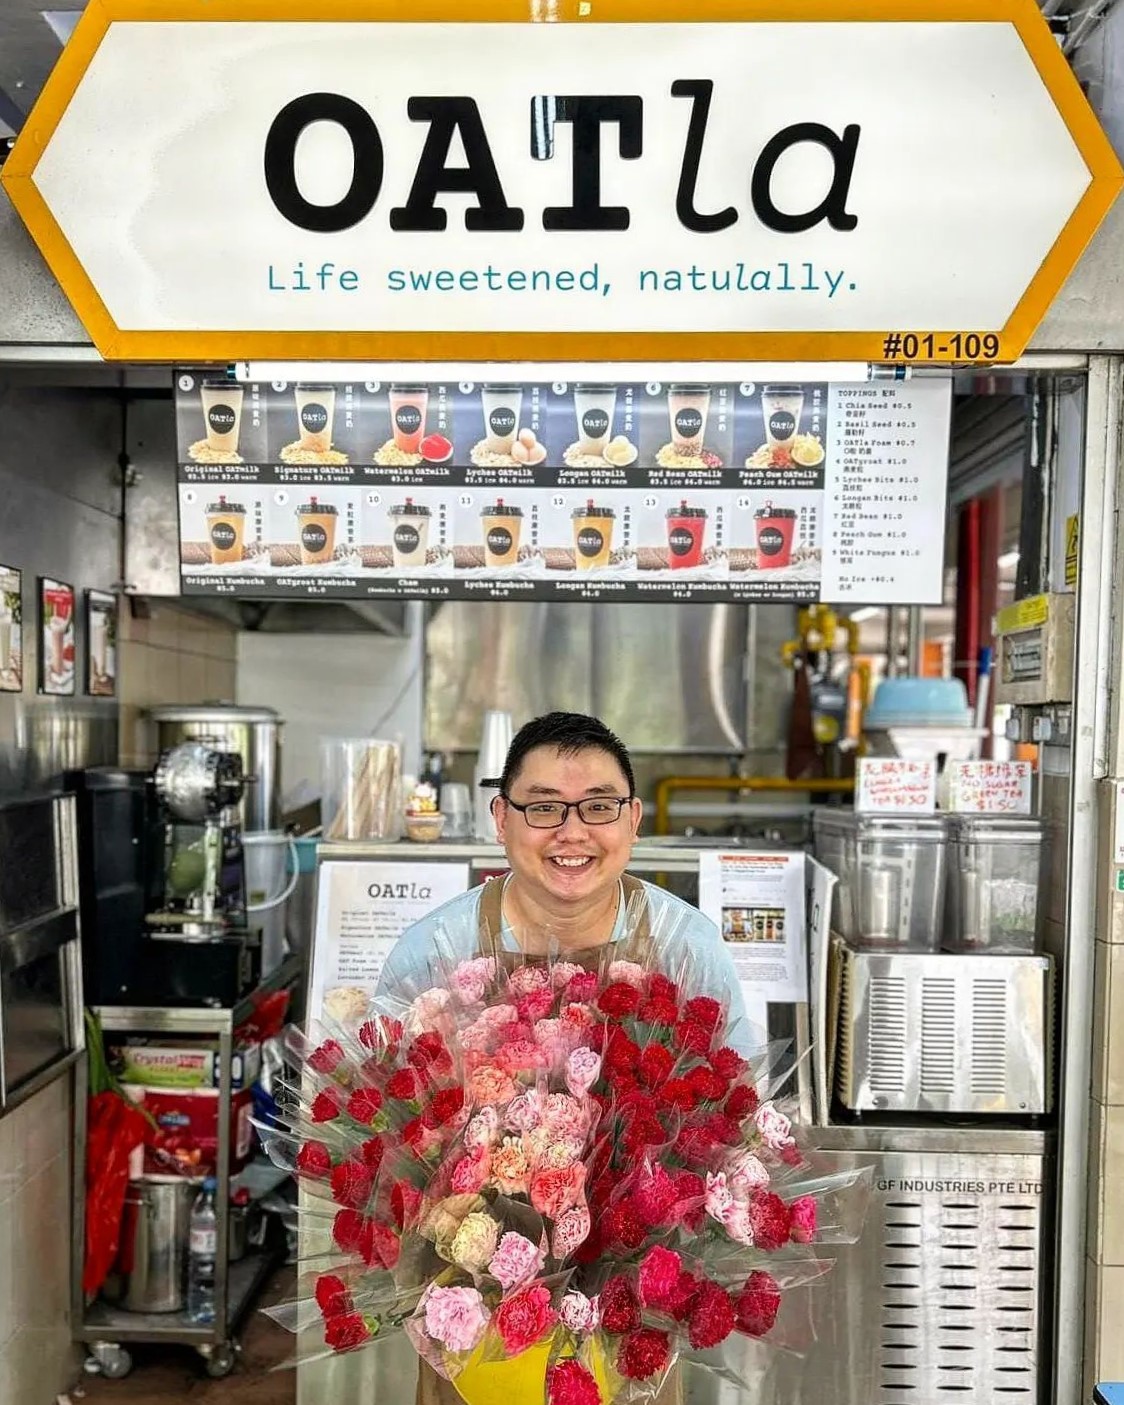 OATla-founder-of-the-business